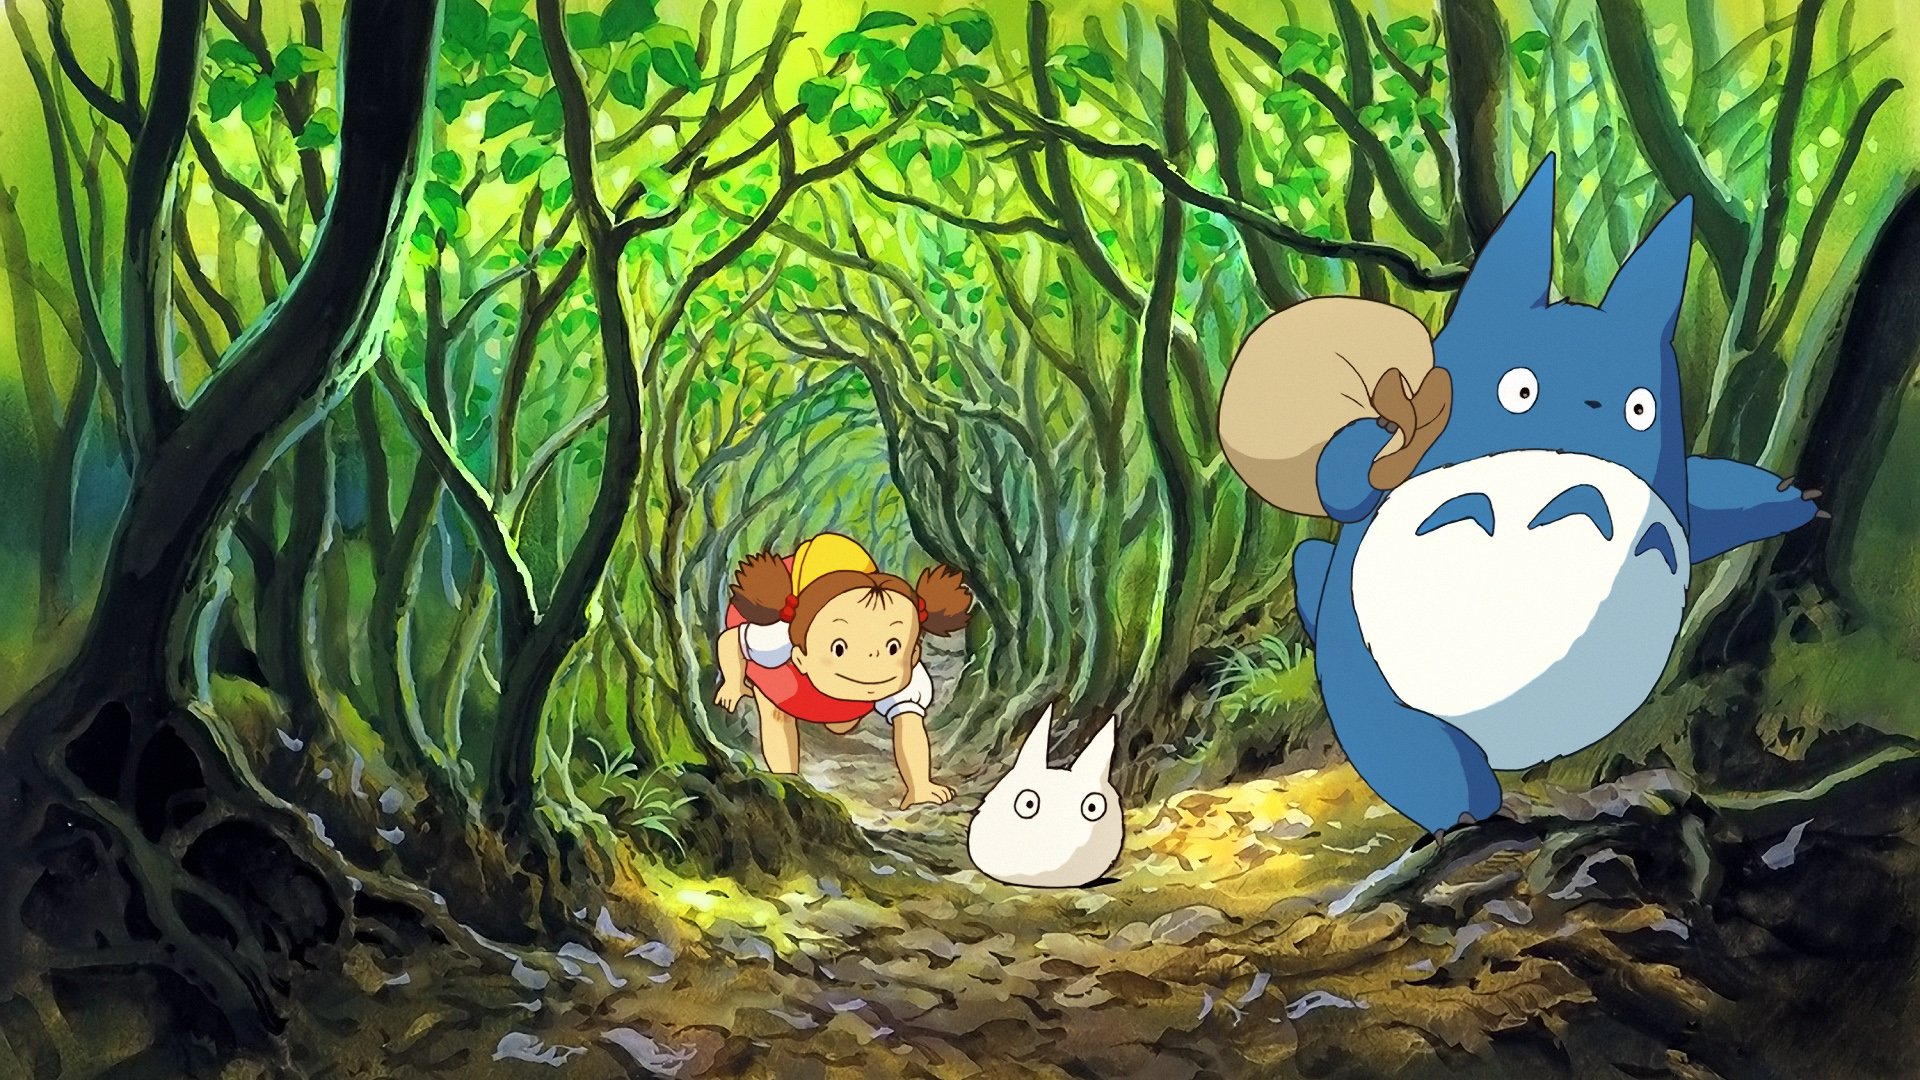 Totoro Studio Ghibli wallpaper 1920x1080 288586 WallpaperUP